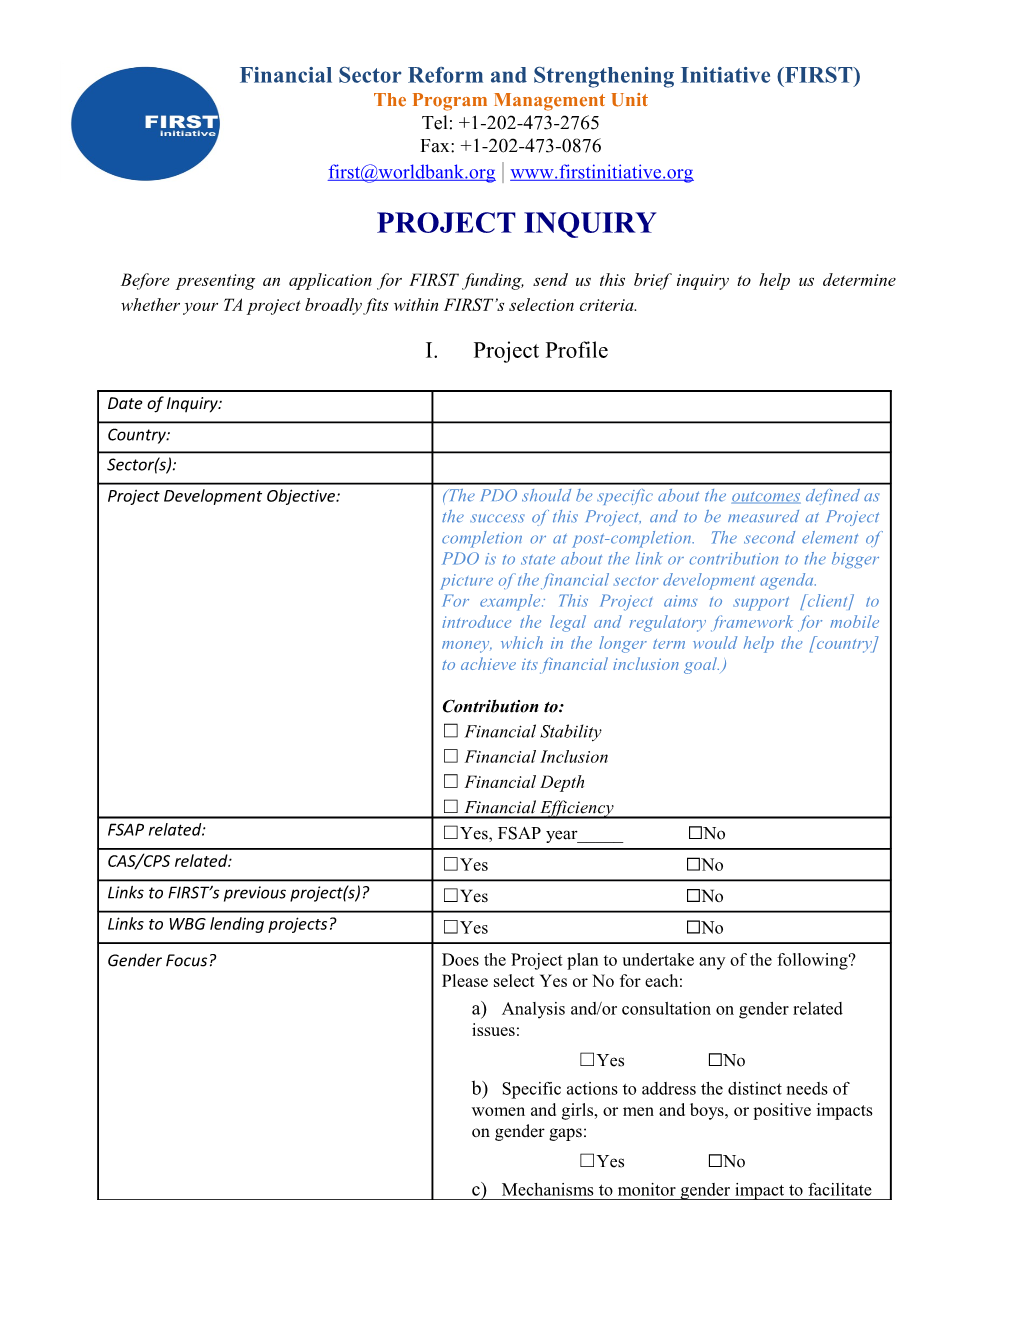 Project Inquiry